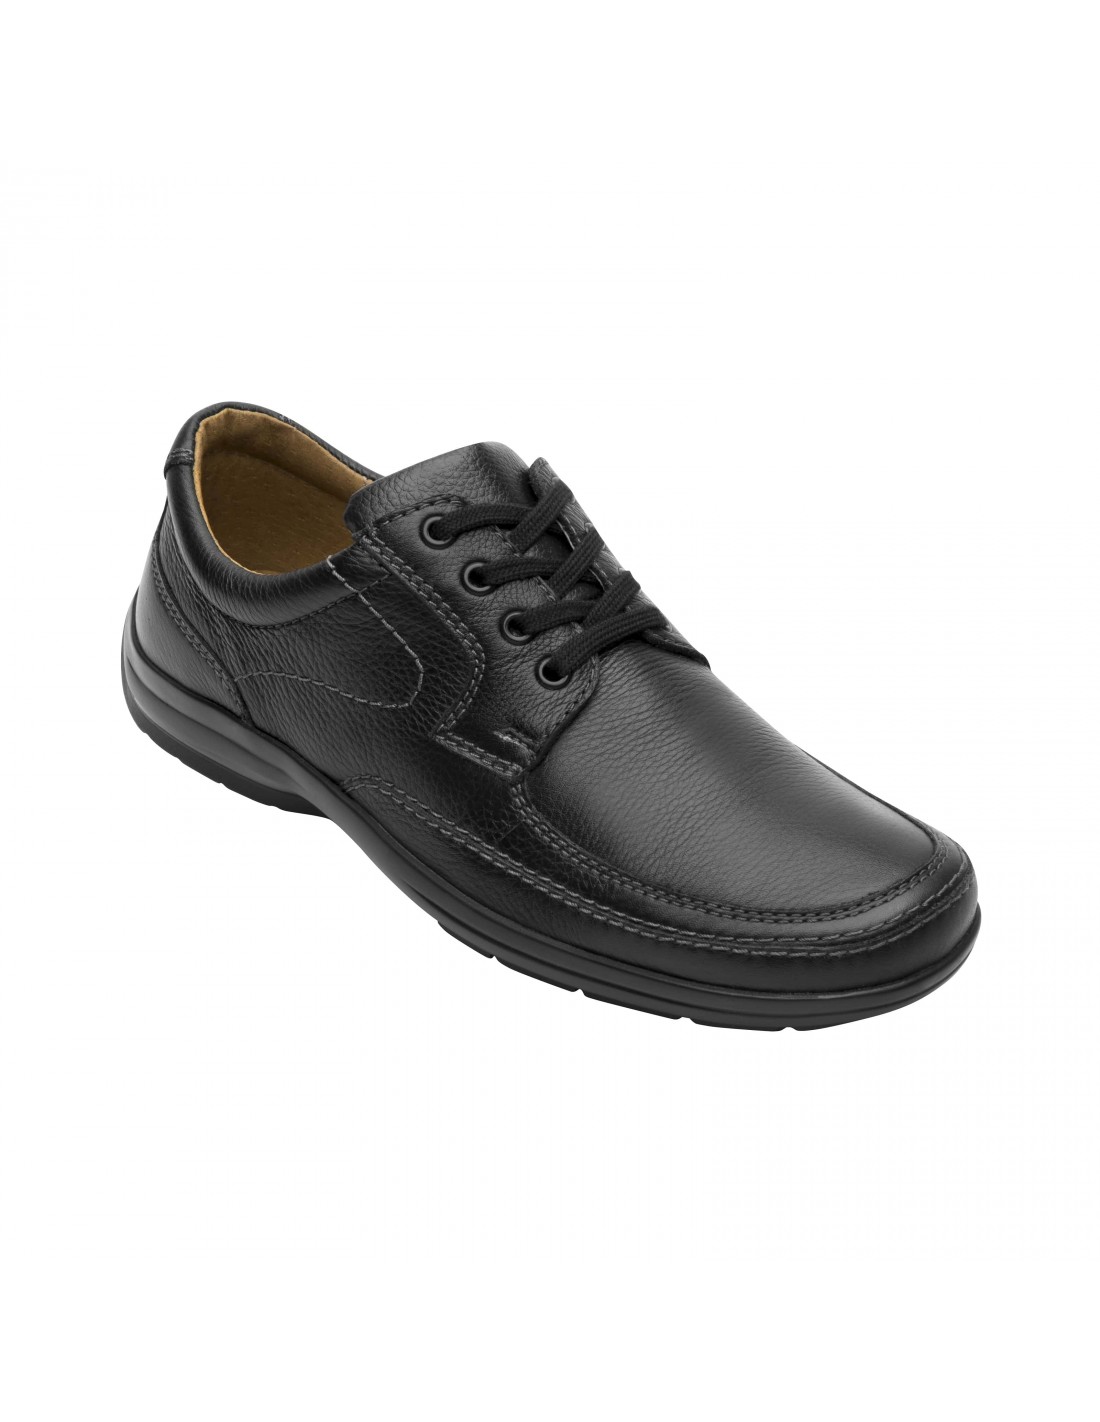 Zapato Caballero 71612 Negro Piel Con Agujetas